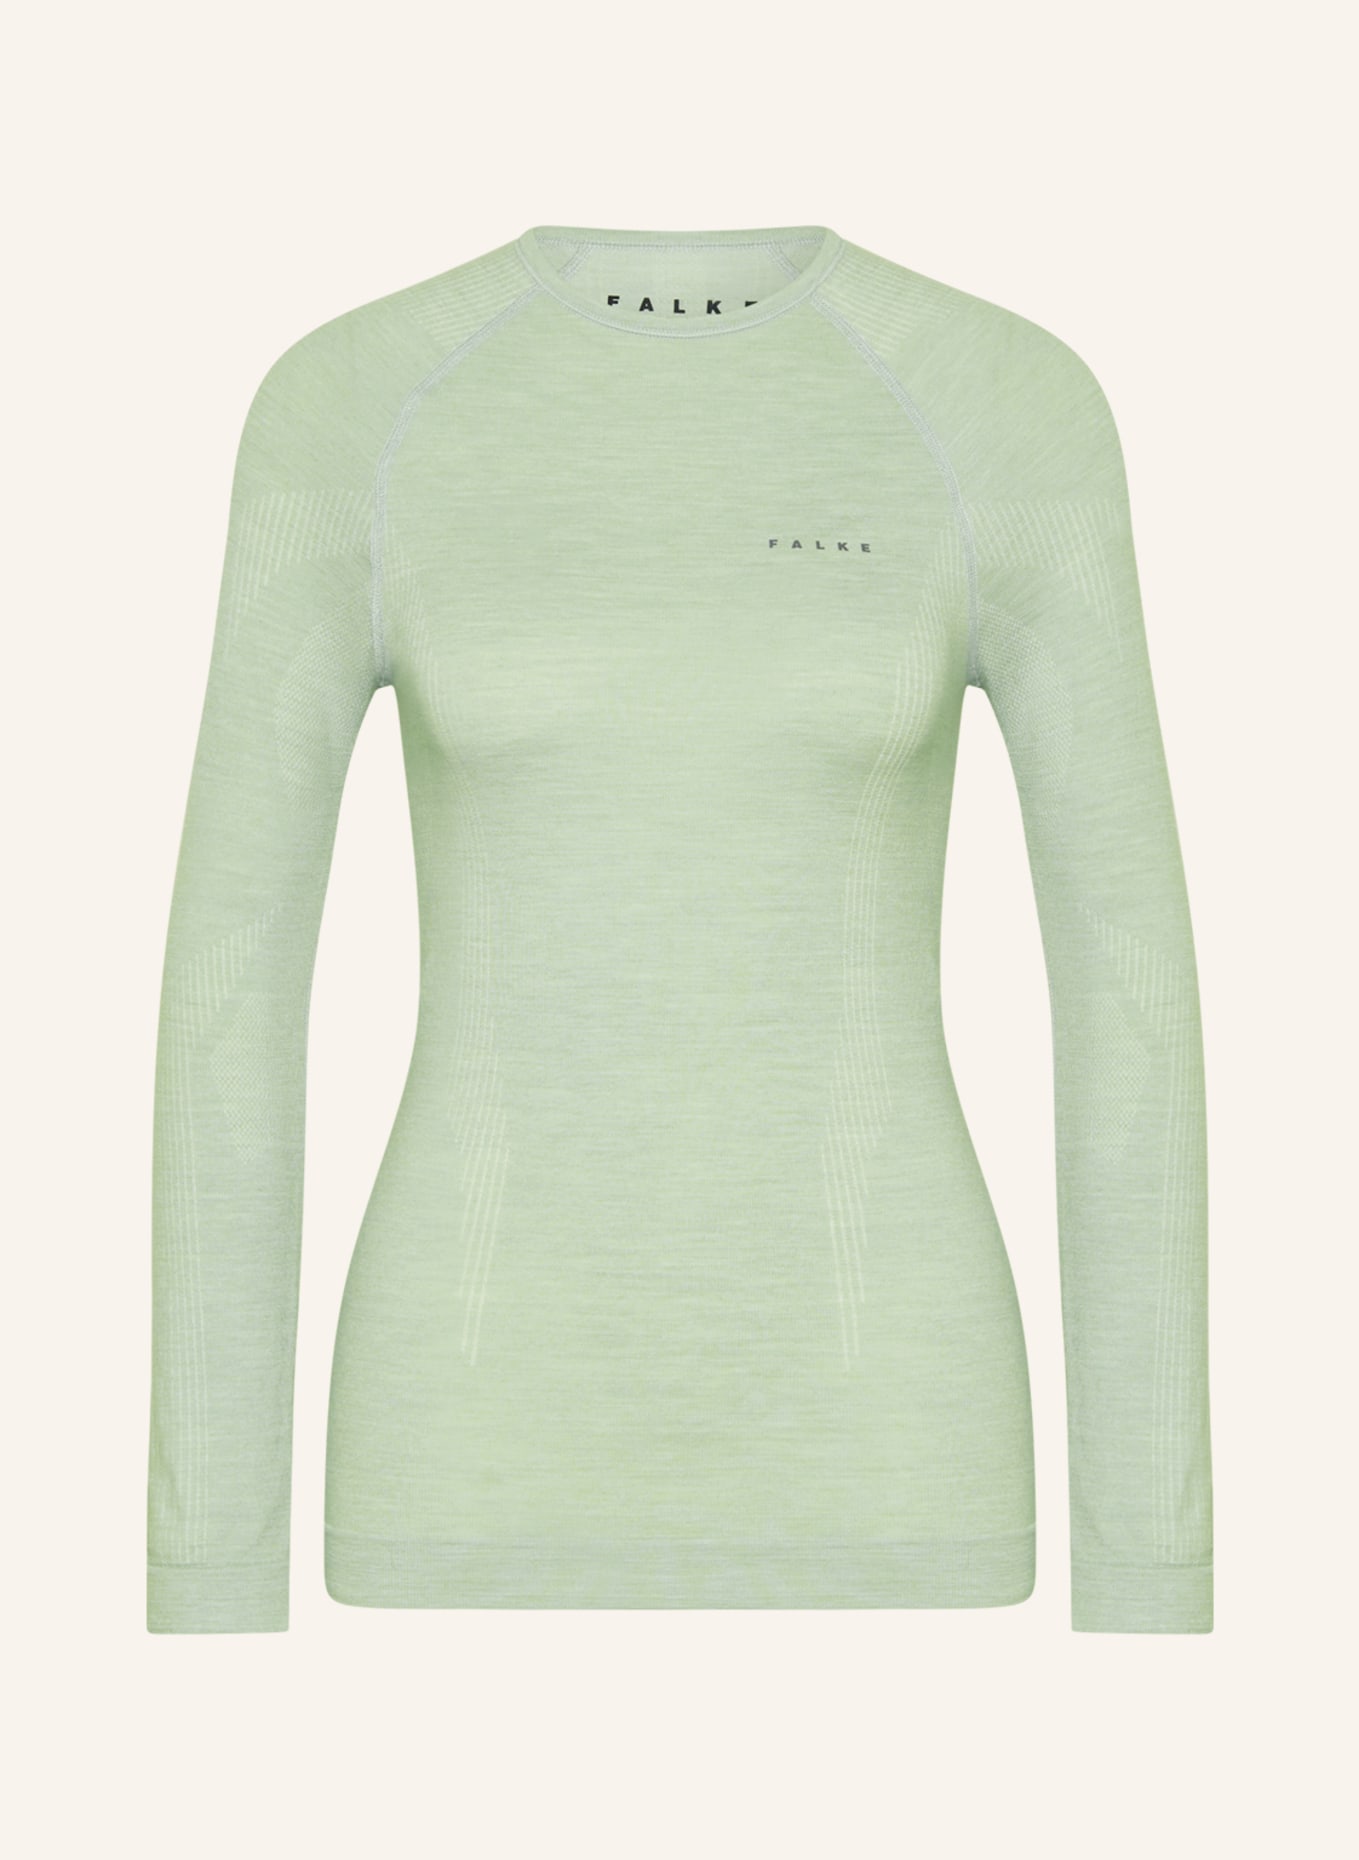 FALKE Funktionswäsche-Shirt WOOL-TECH mit Merinowolle, Farbe: HELLGRÜN (Bild 1)